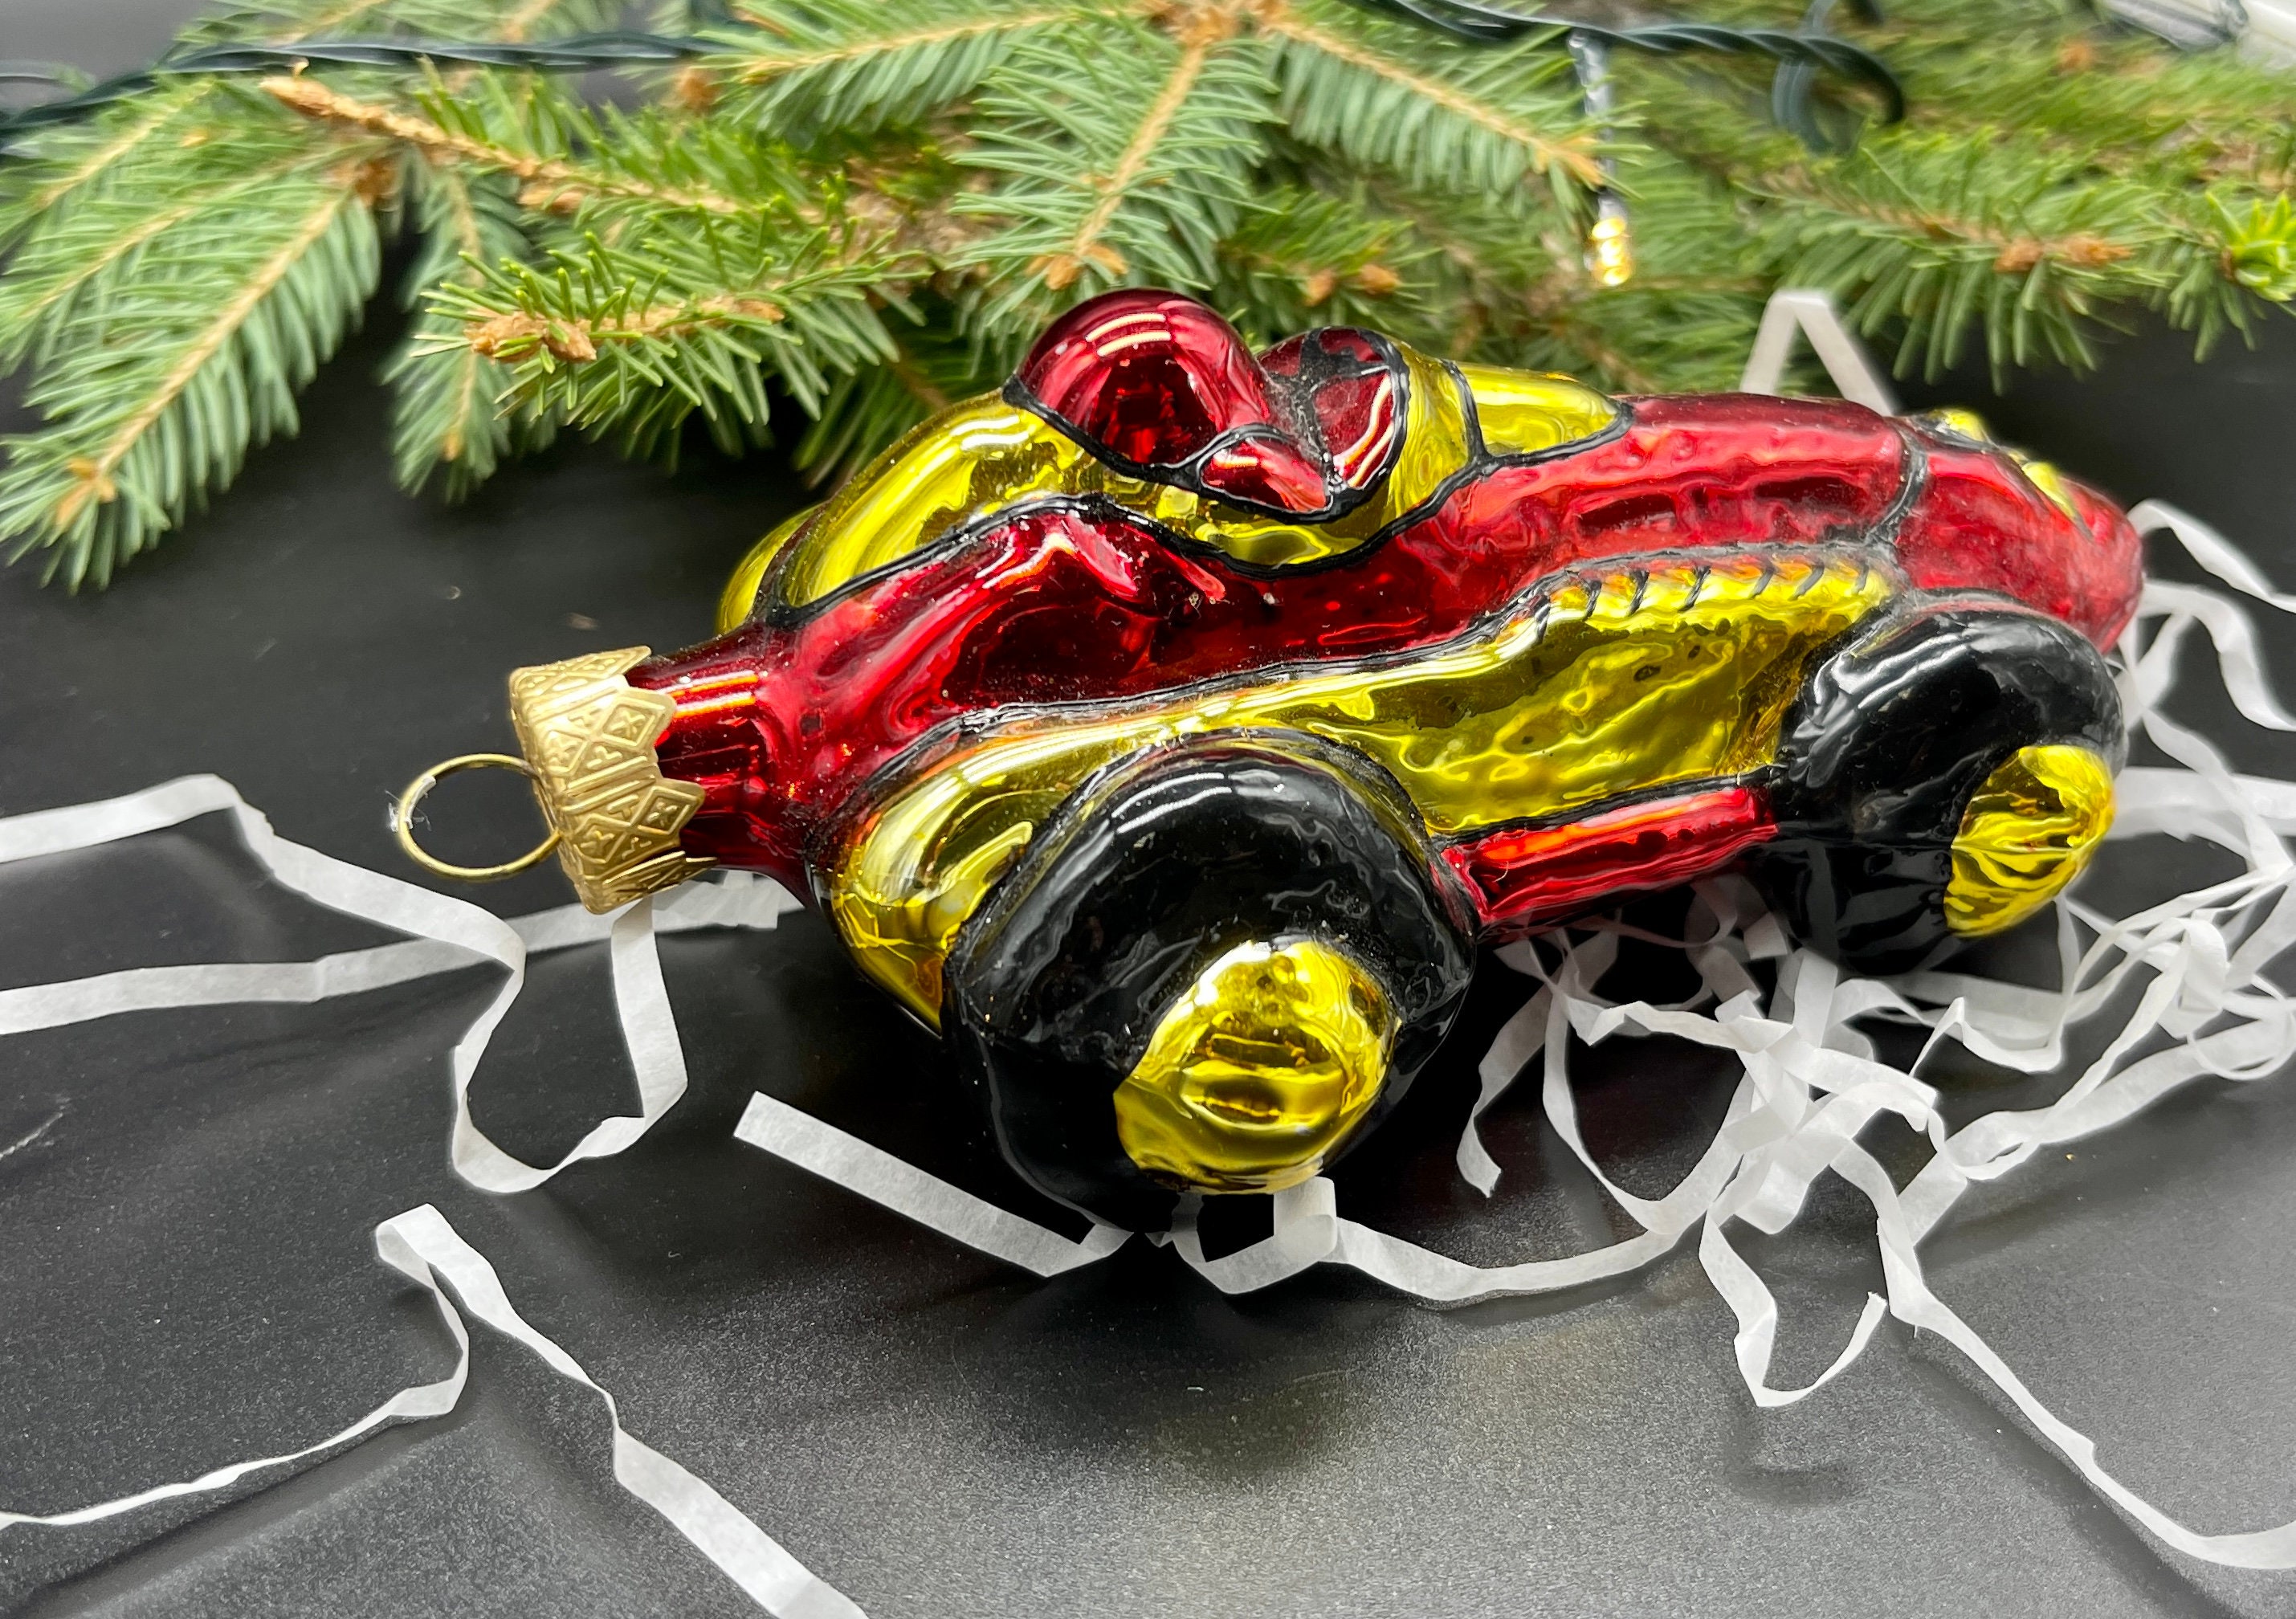 Decorative Glass ornament Red Car & Christmas tree - RENIO&CLARK